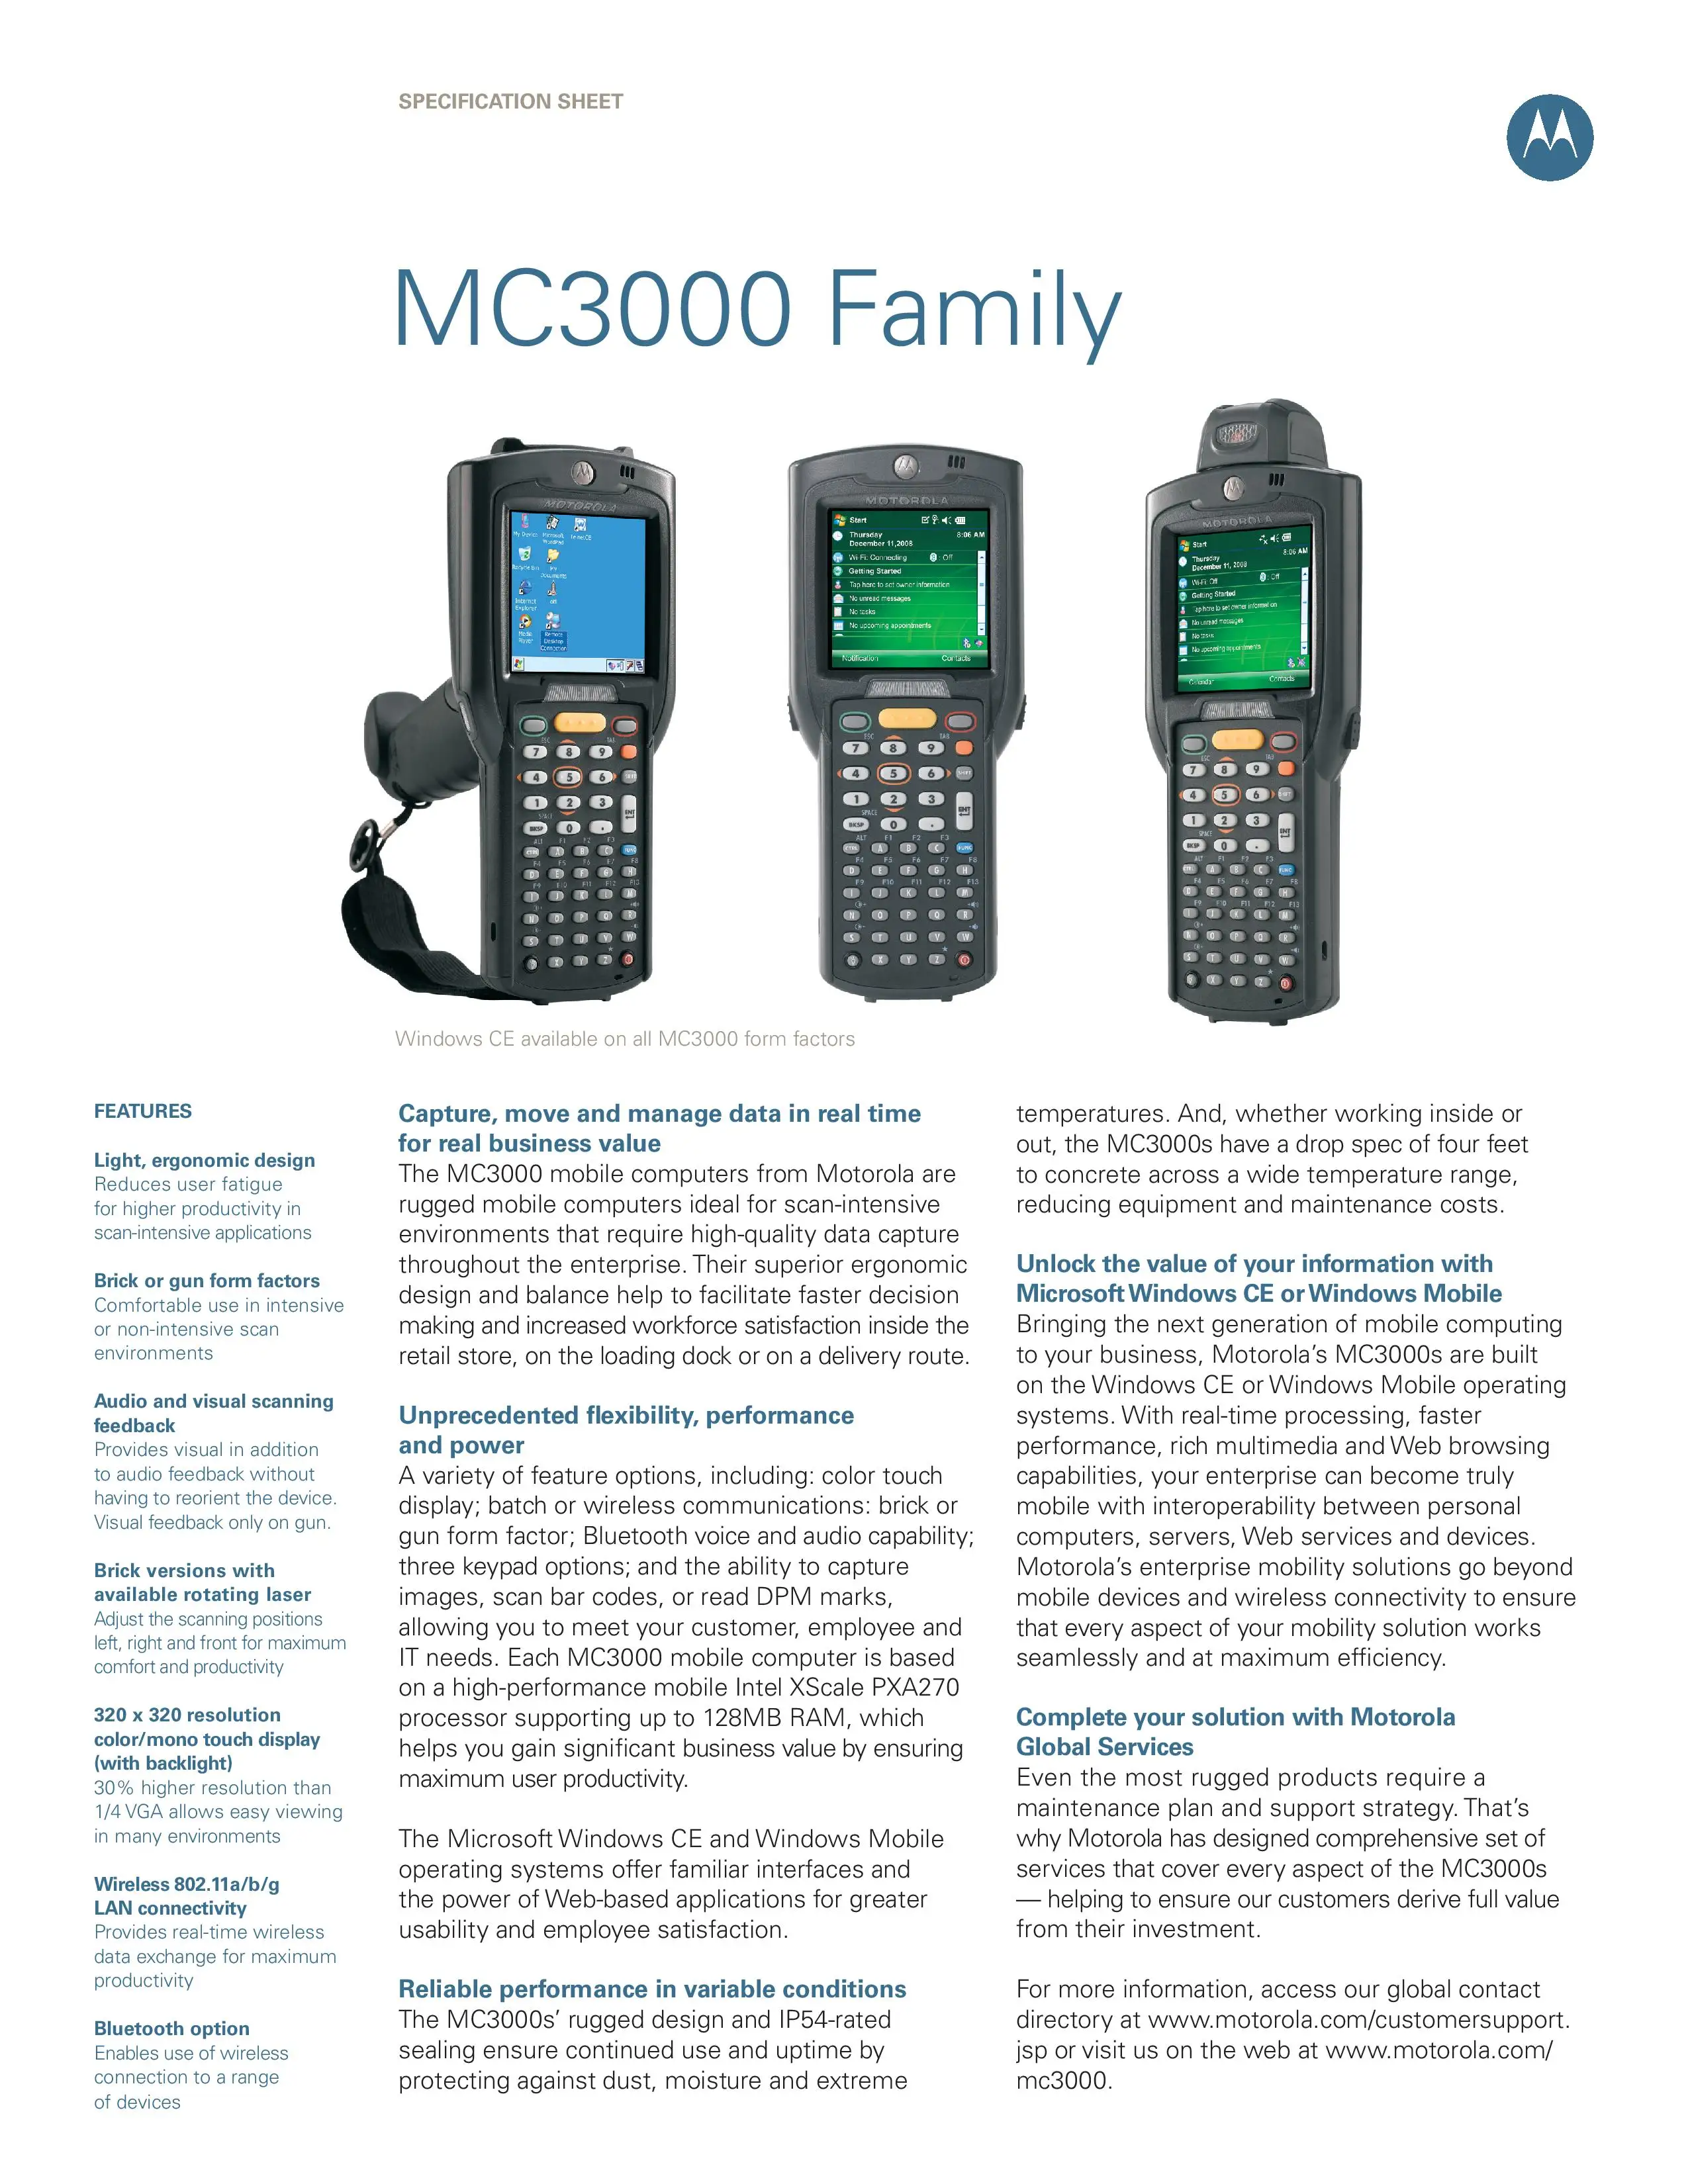 MC3090, Rotating Head, 1D Laser, 64/64Ram, Wifi 802.11a/b/g, CE 5.0